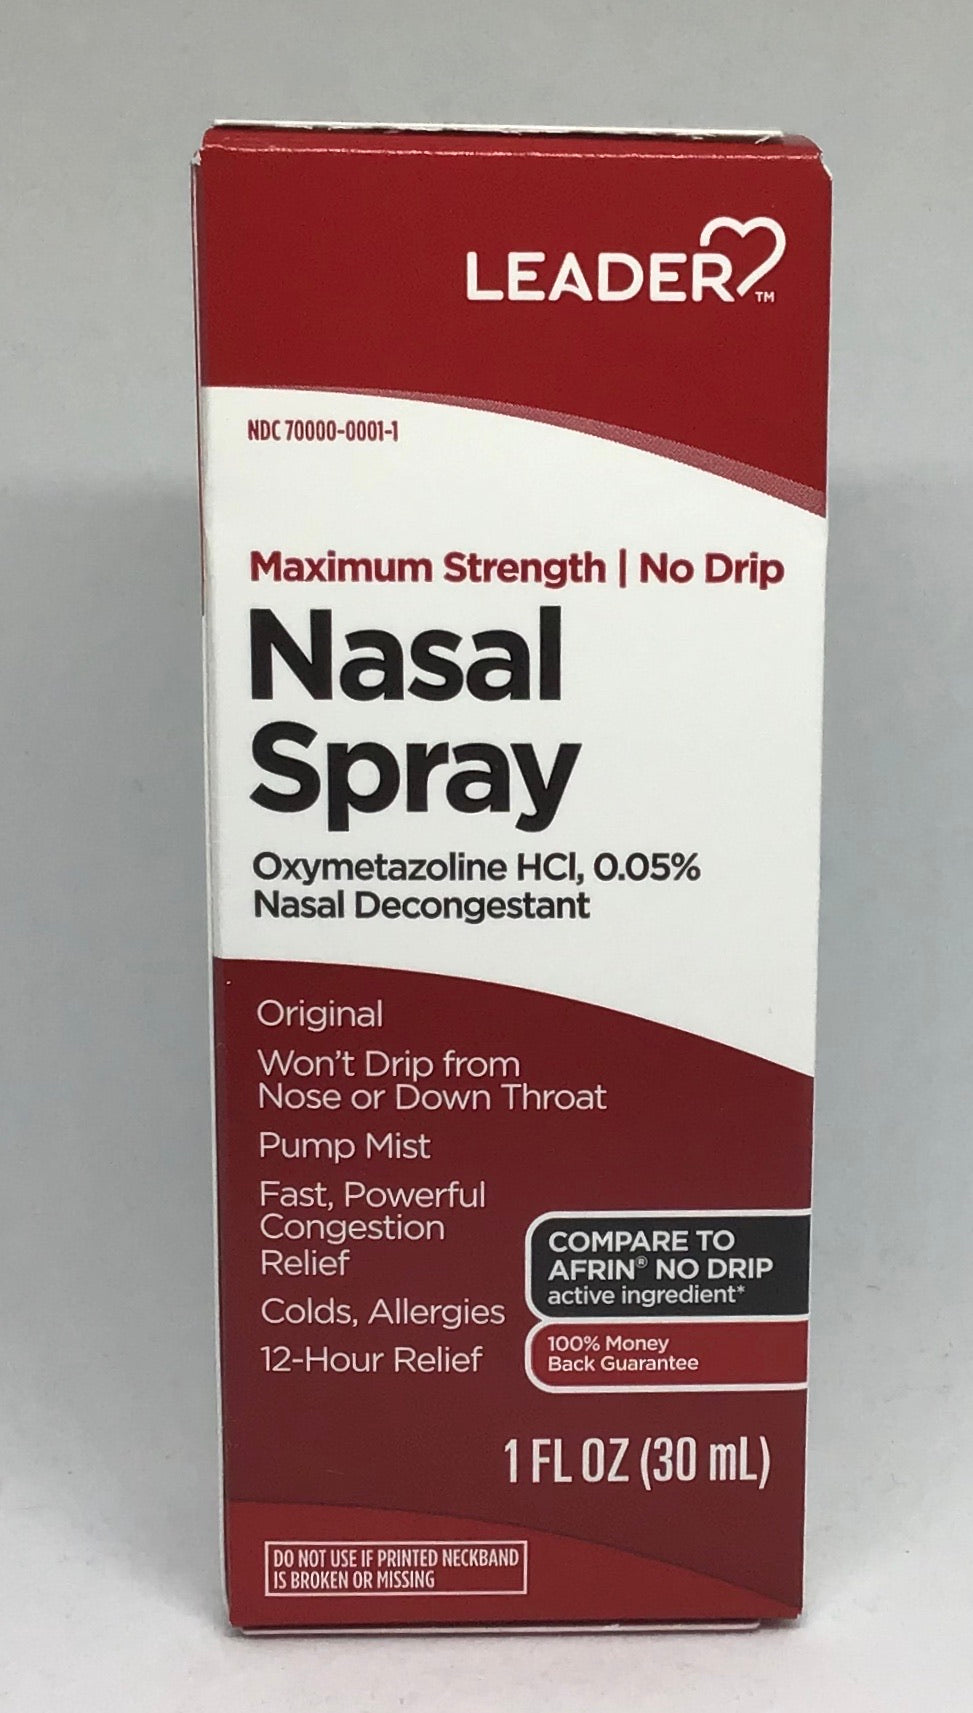 Reppon Spray Nasal 10Ml